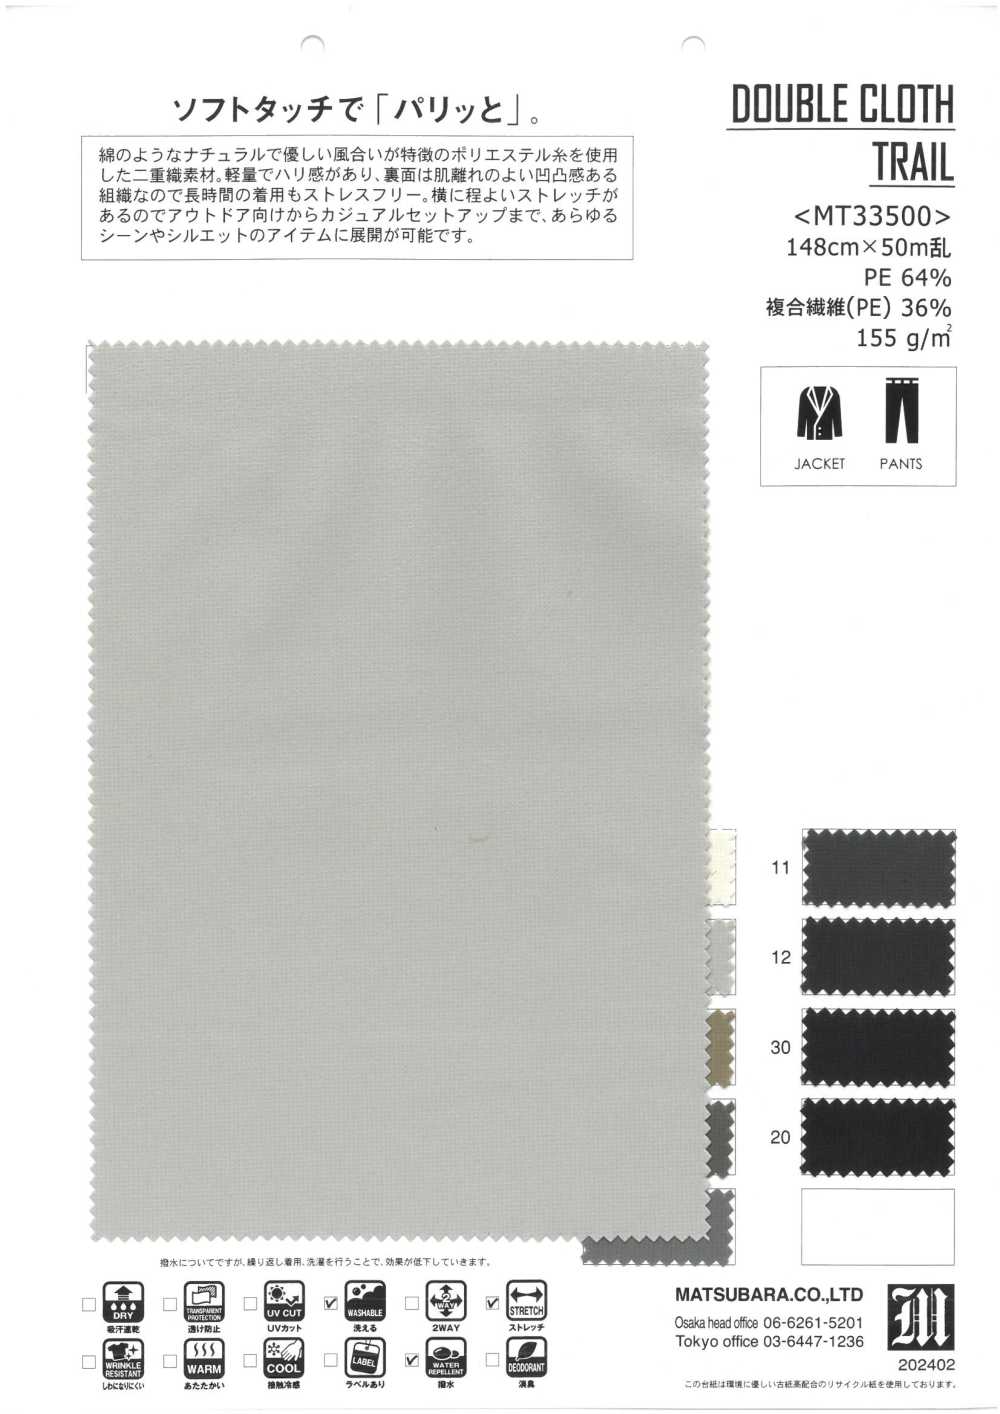 MT33500 DOUBLE CLOTH TRAIL[生地] 松原